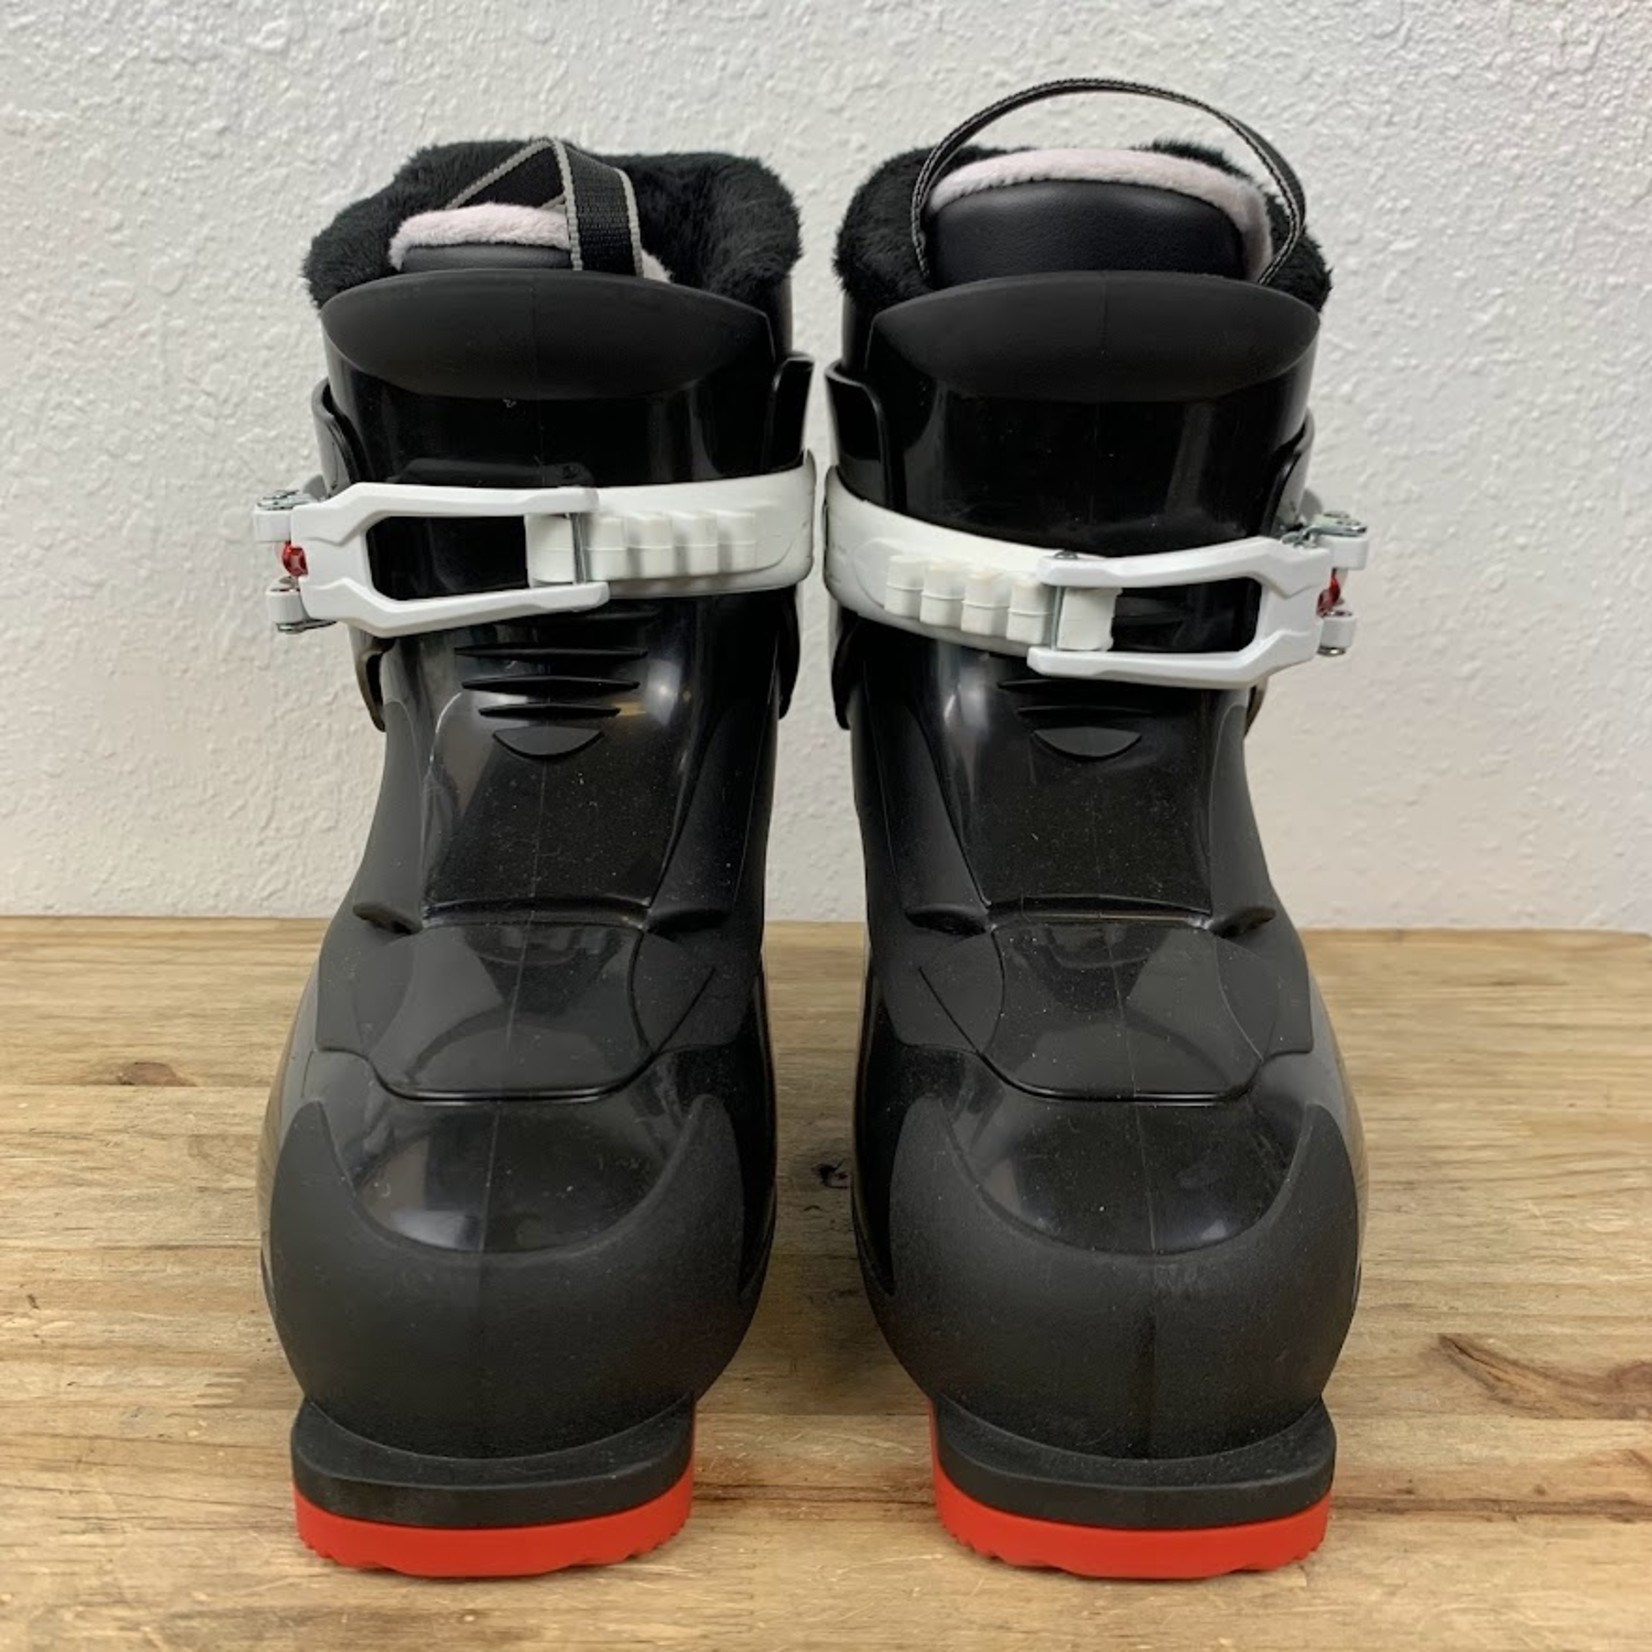 NEW 2021 TecnoPro Kids Ski Boots, Size 17